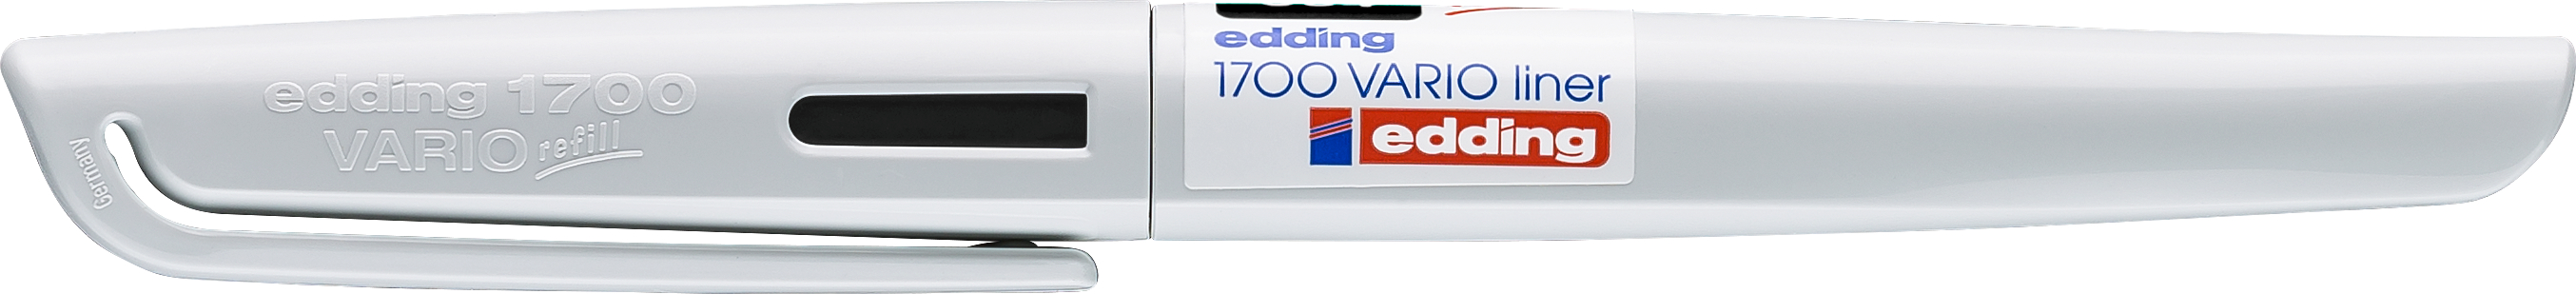 EDDING Fineliner 1700 0.5mm 1700V-3 bleu